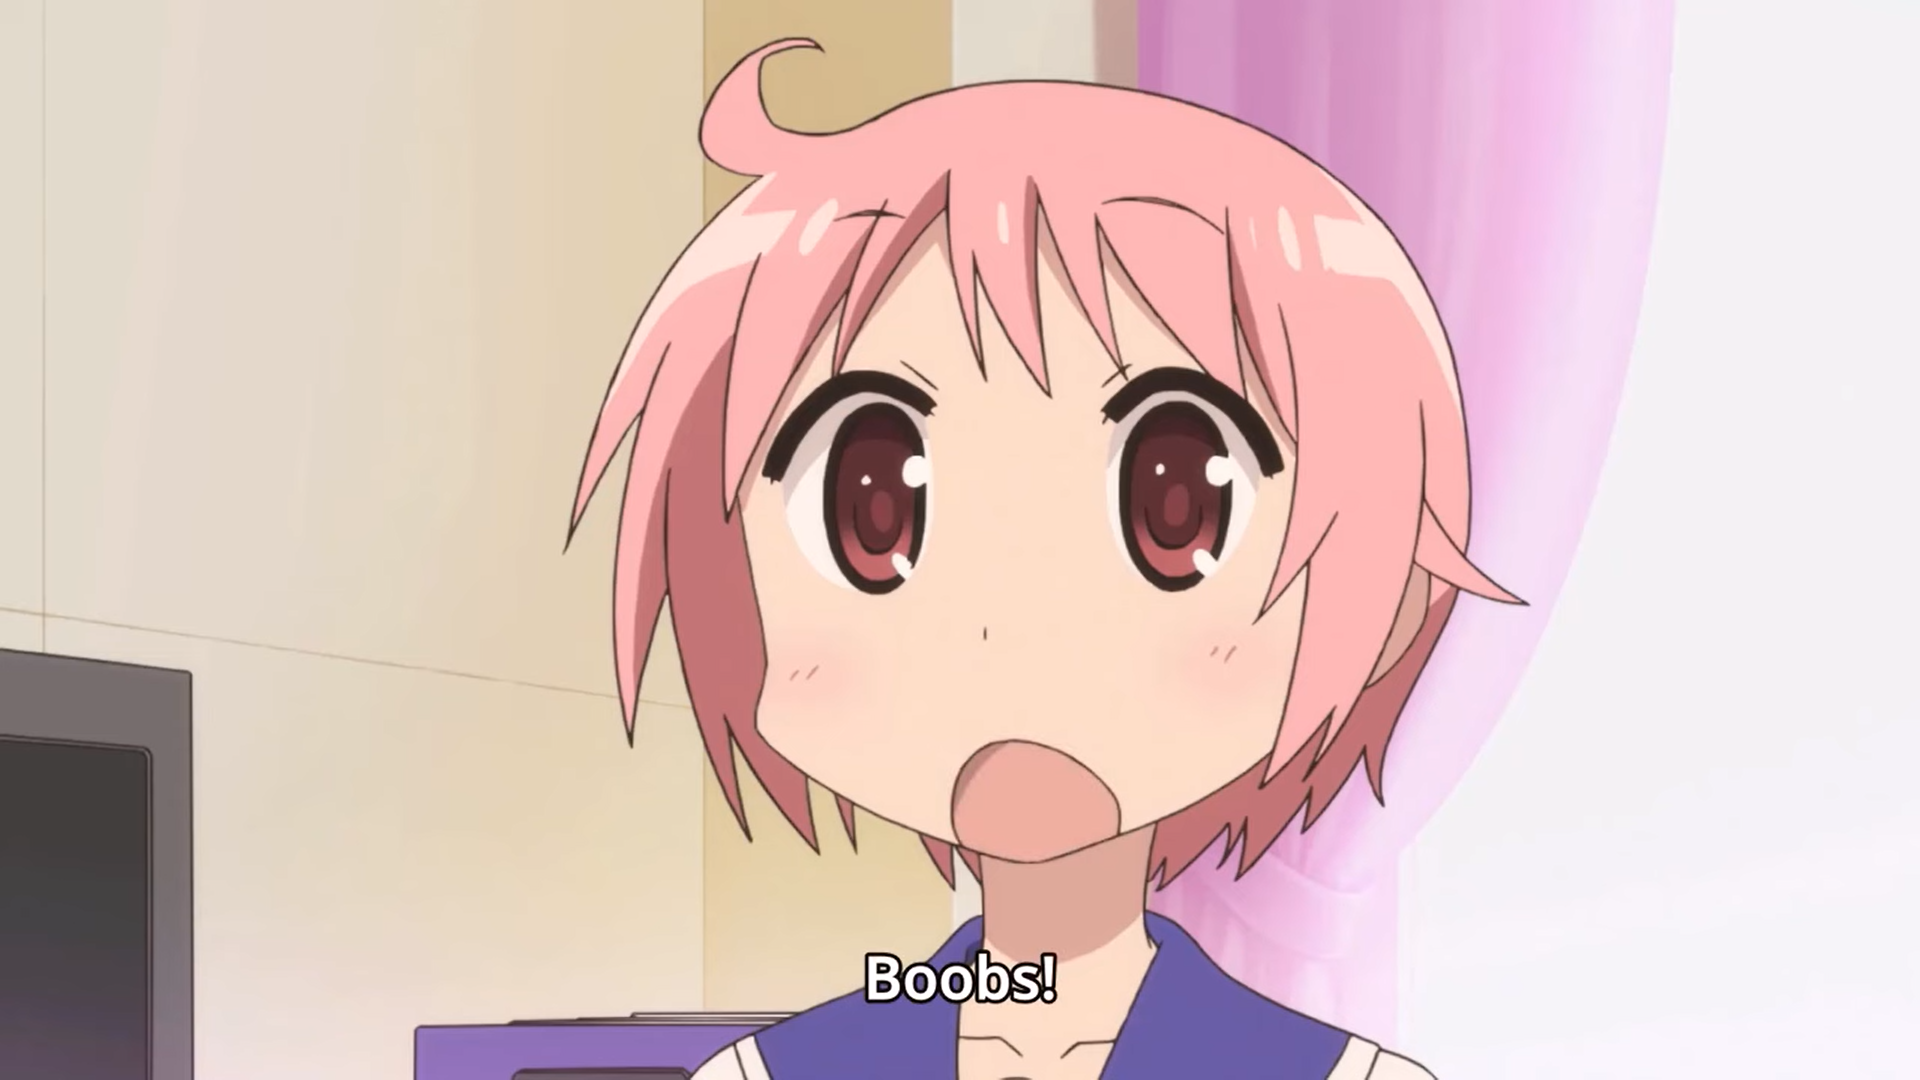 Yuyushiki character Yuzuko saying "Boobs"